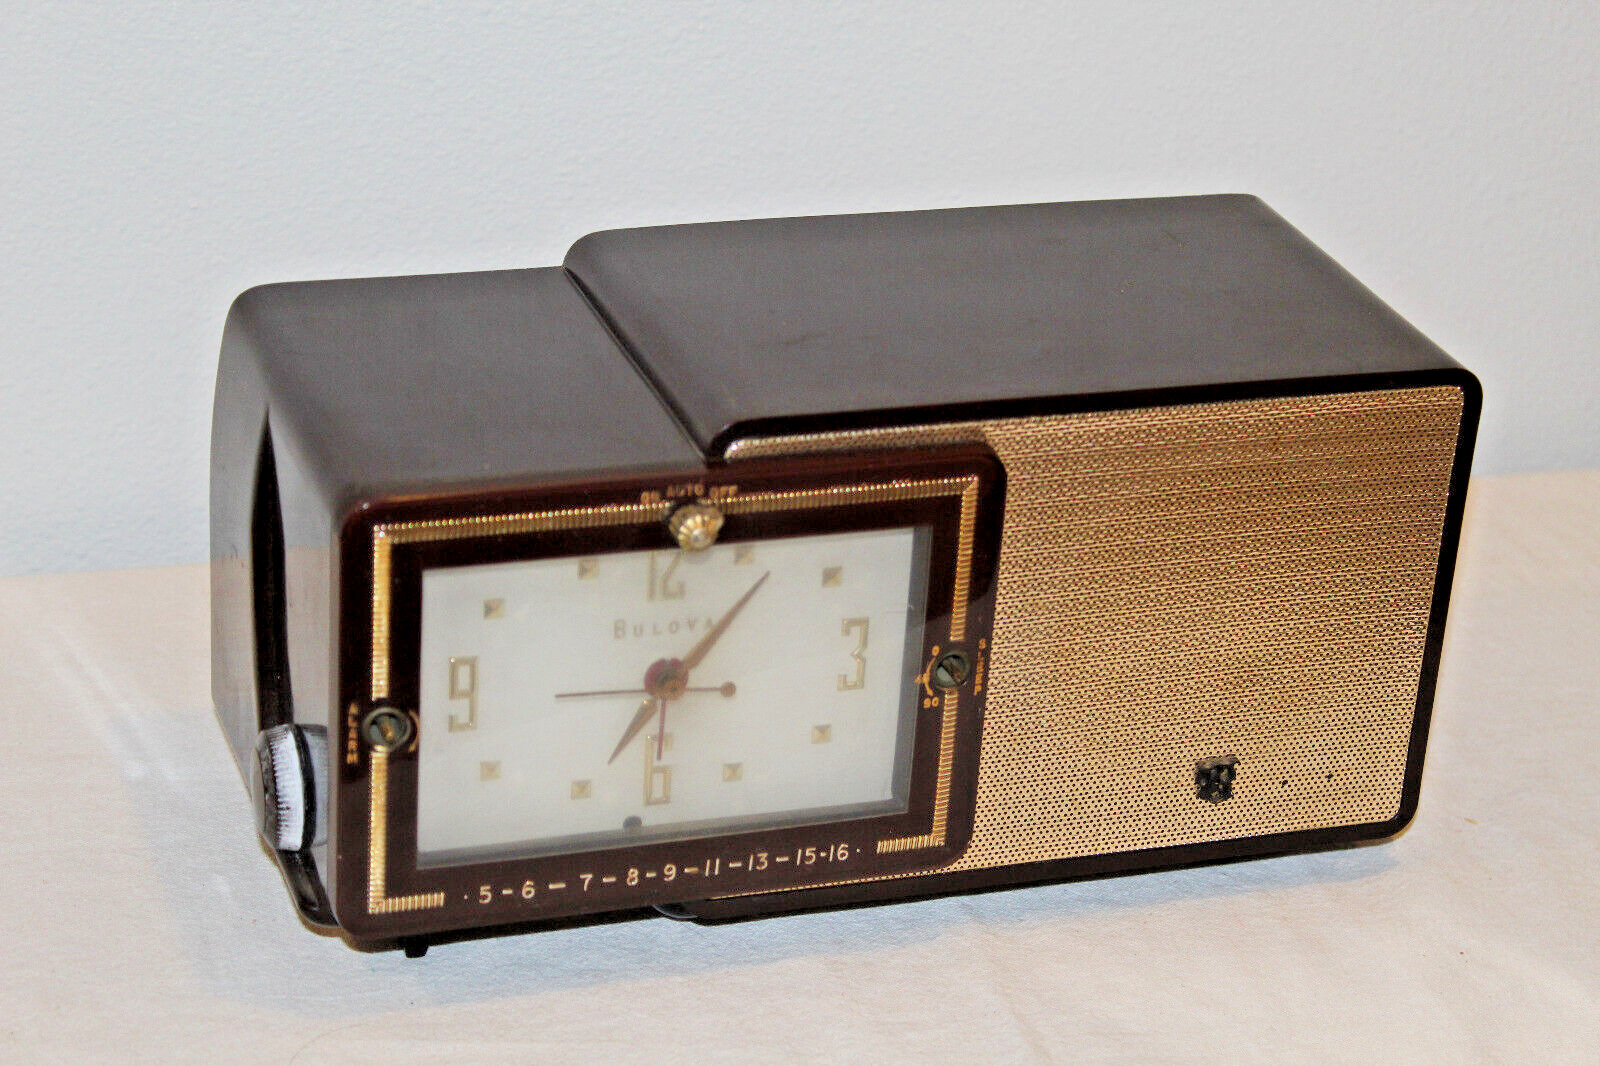 Bulova Model 100 AM Alarm Clock - 5 Tube Radio Bakelite - 1957